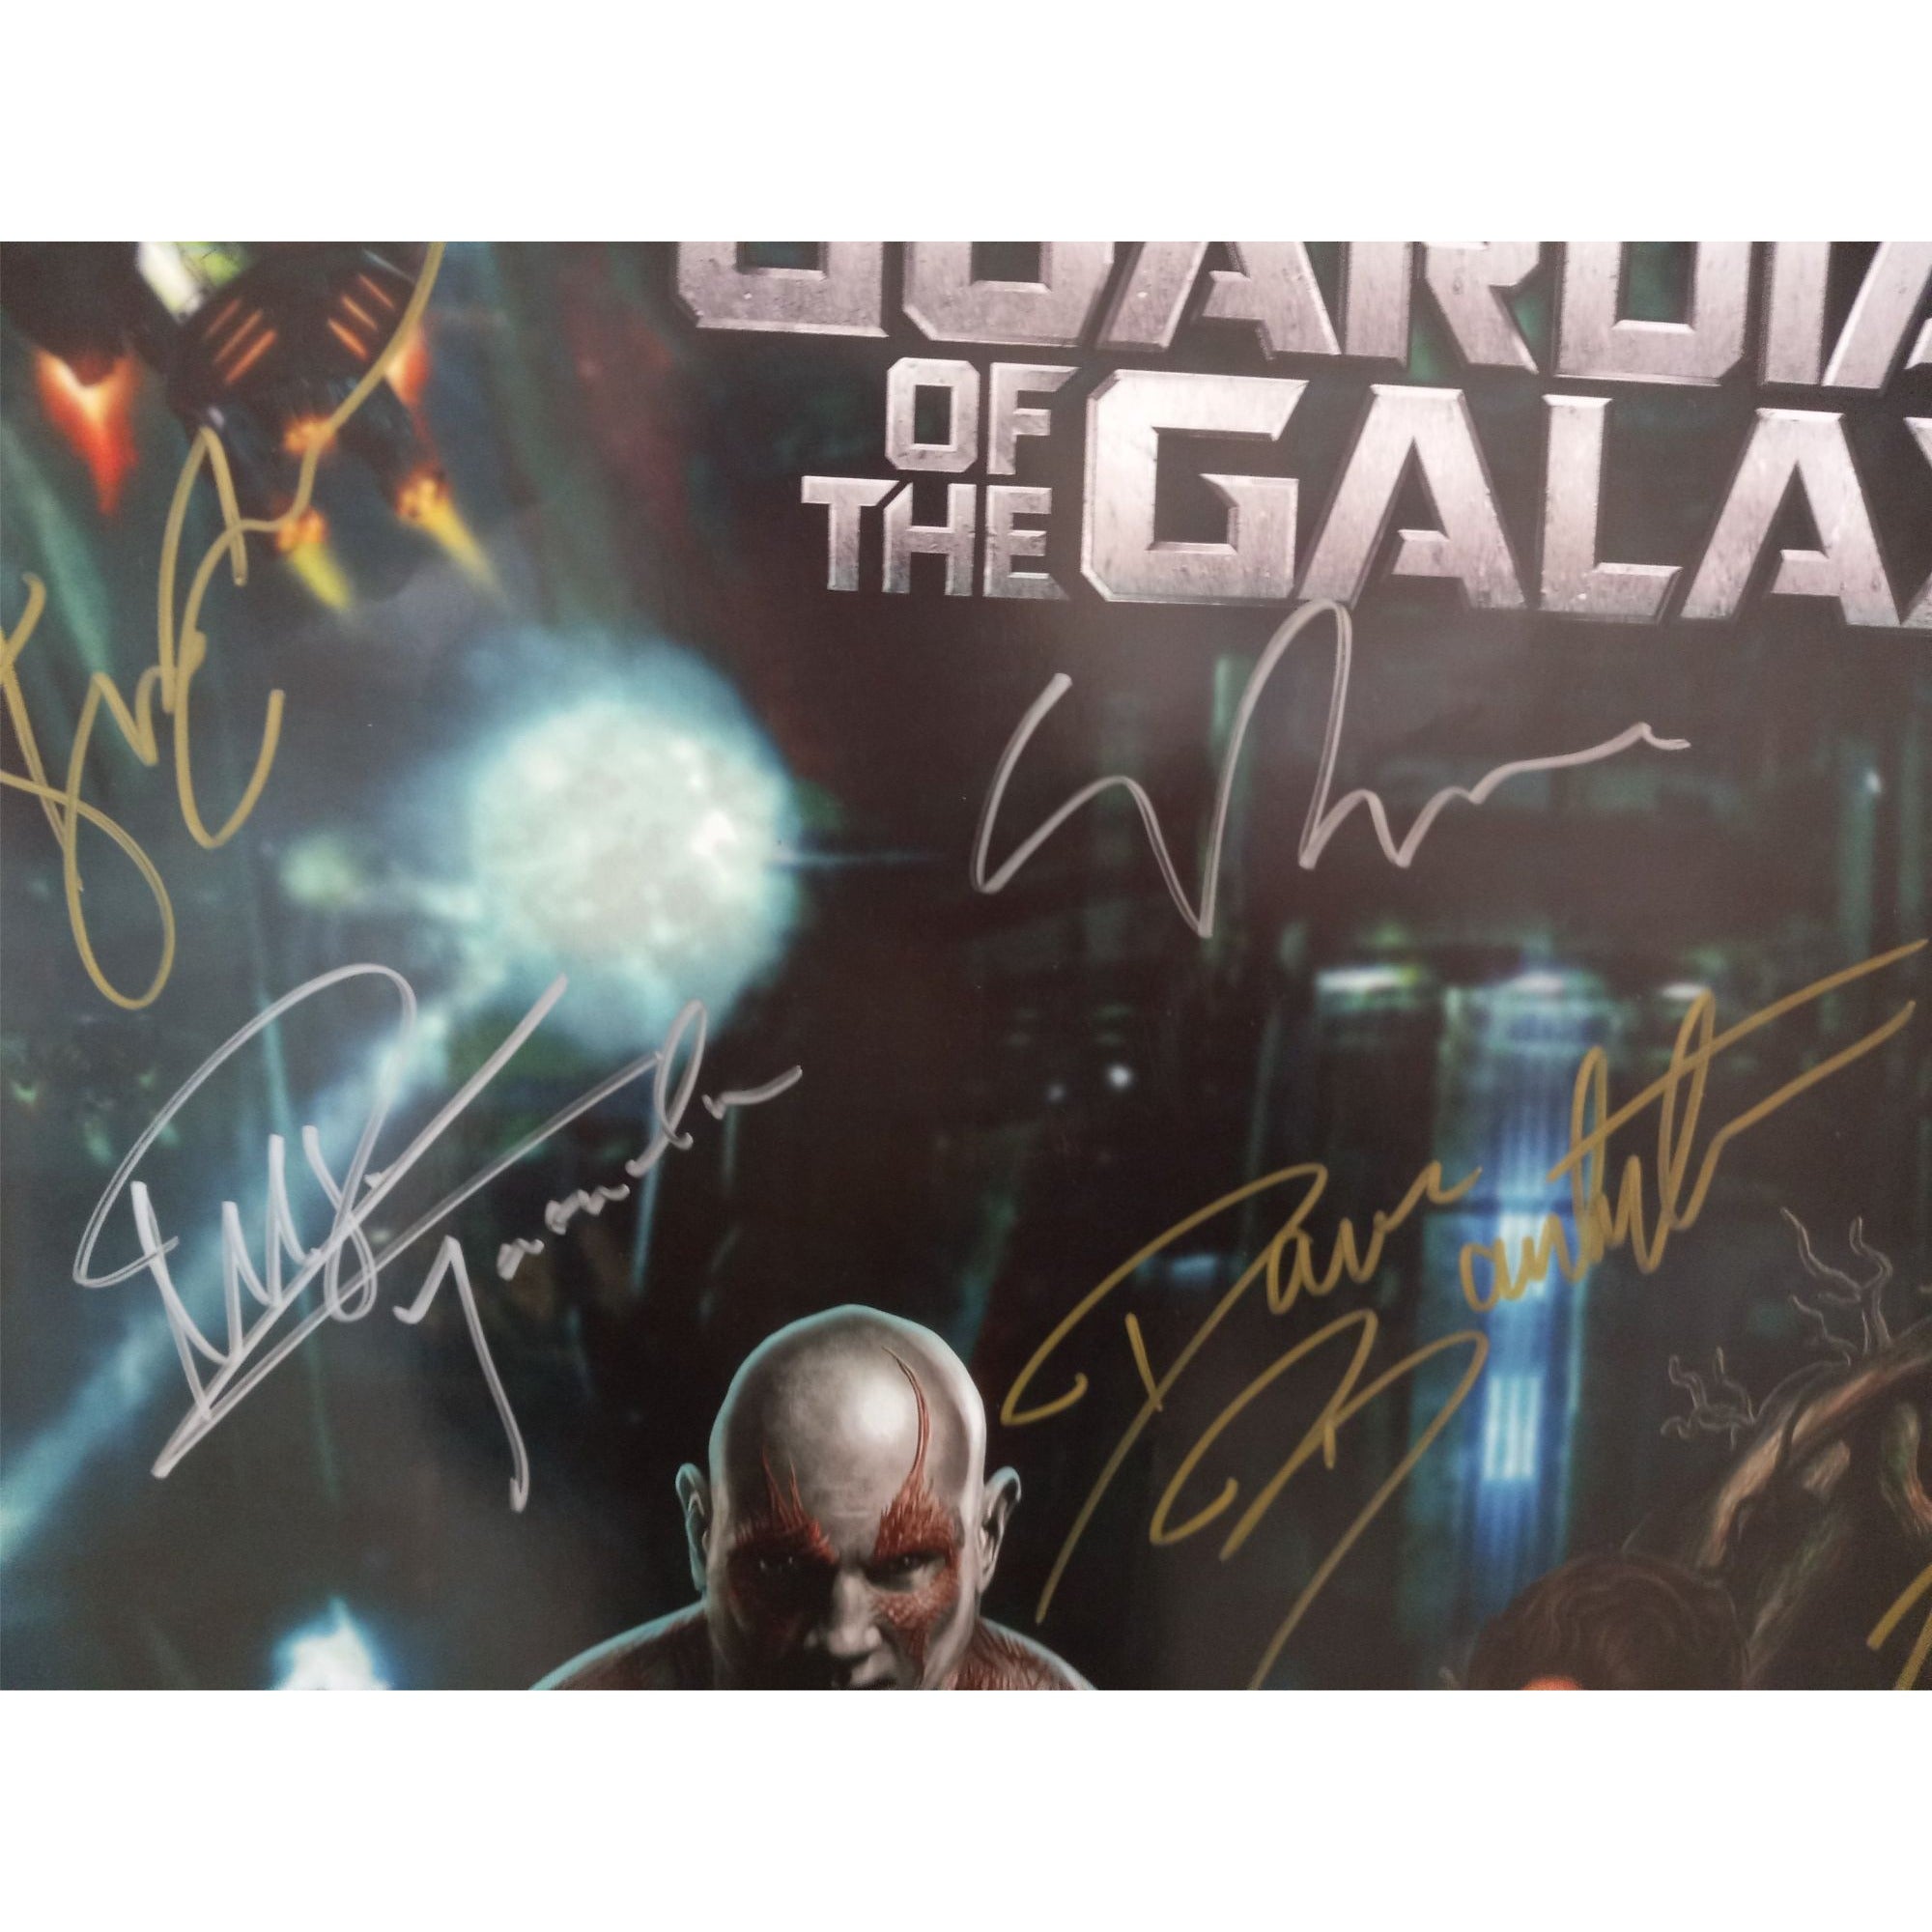 Guardians of the Galaxy 36x24 Vin Diesel Bradley Cooper Chris Pratt Stan Lee cast signed with proof